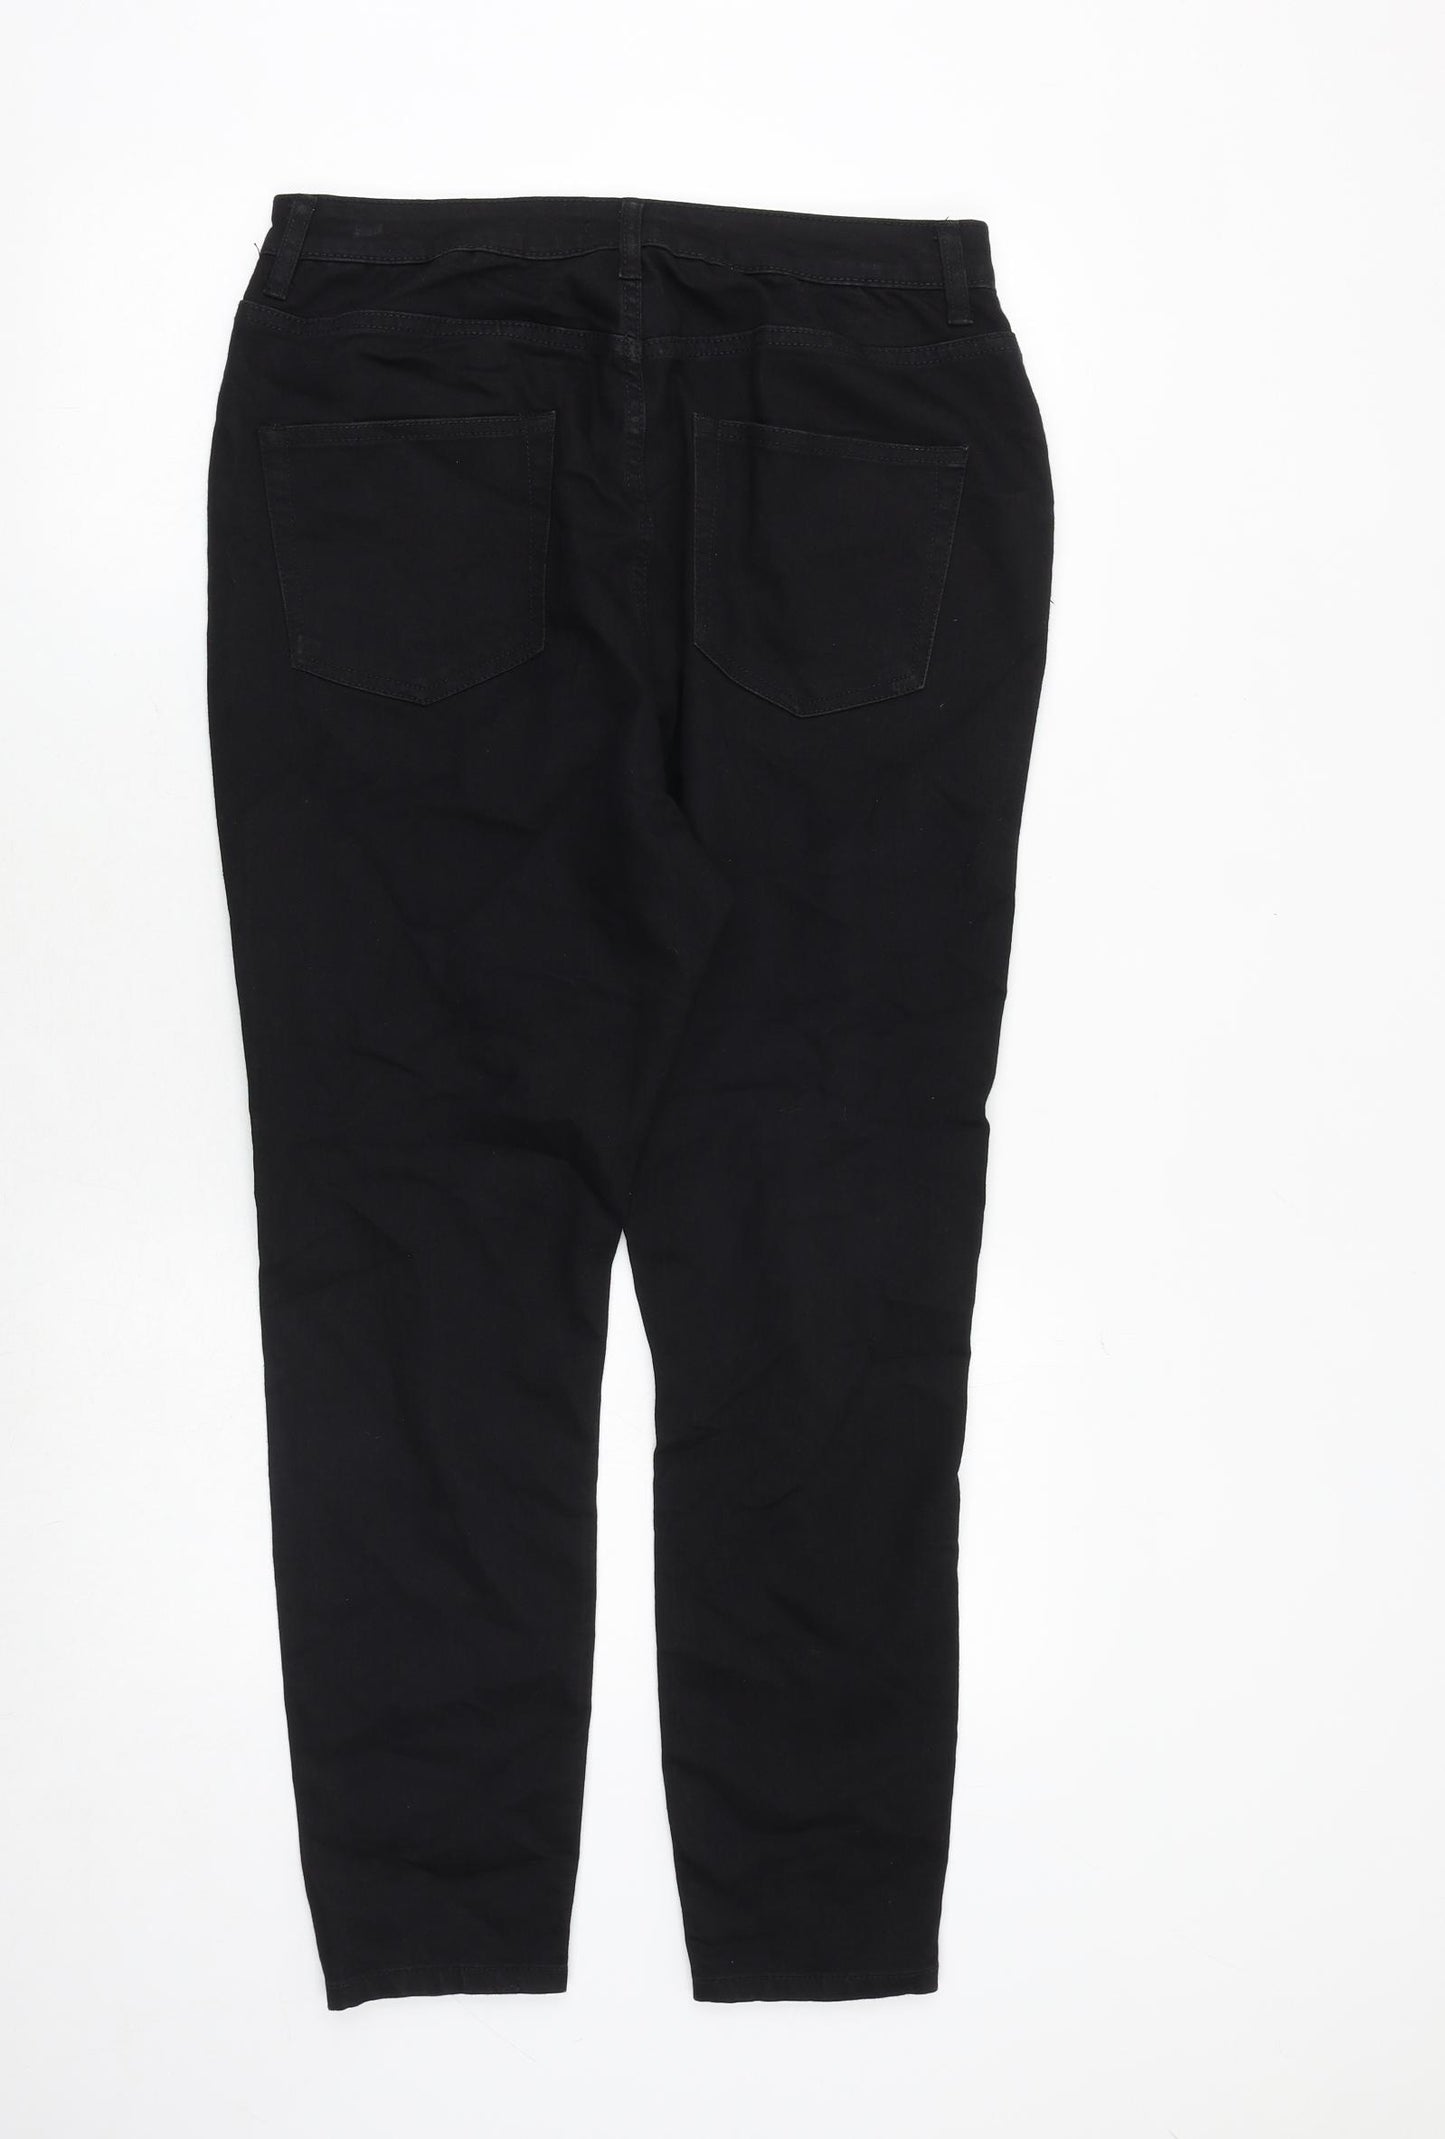 Boohoo Womens Black Cotton Skinny Jeans Size 14 Regular Zip